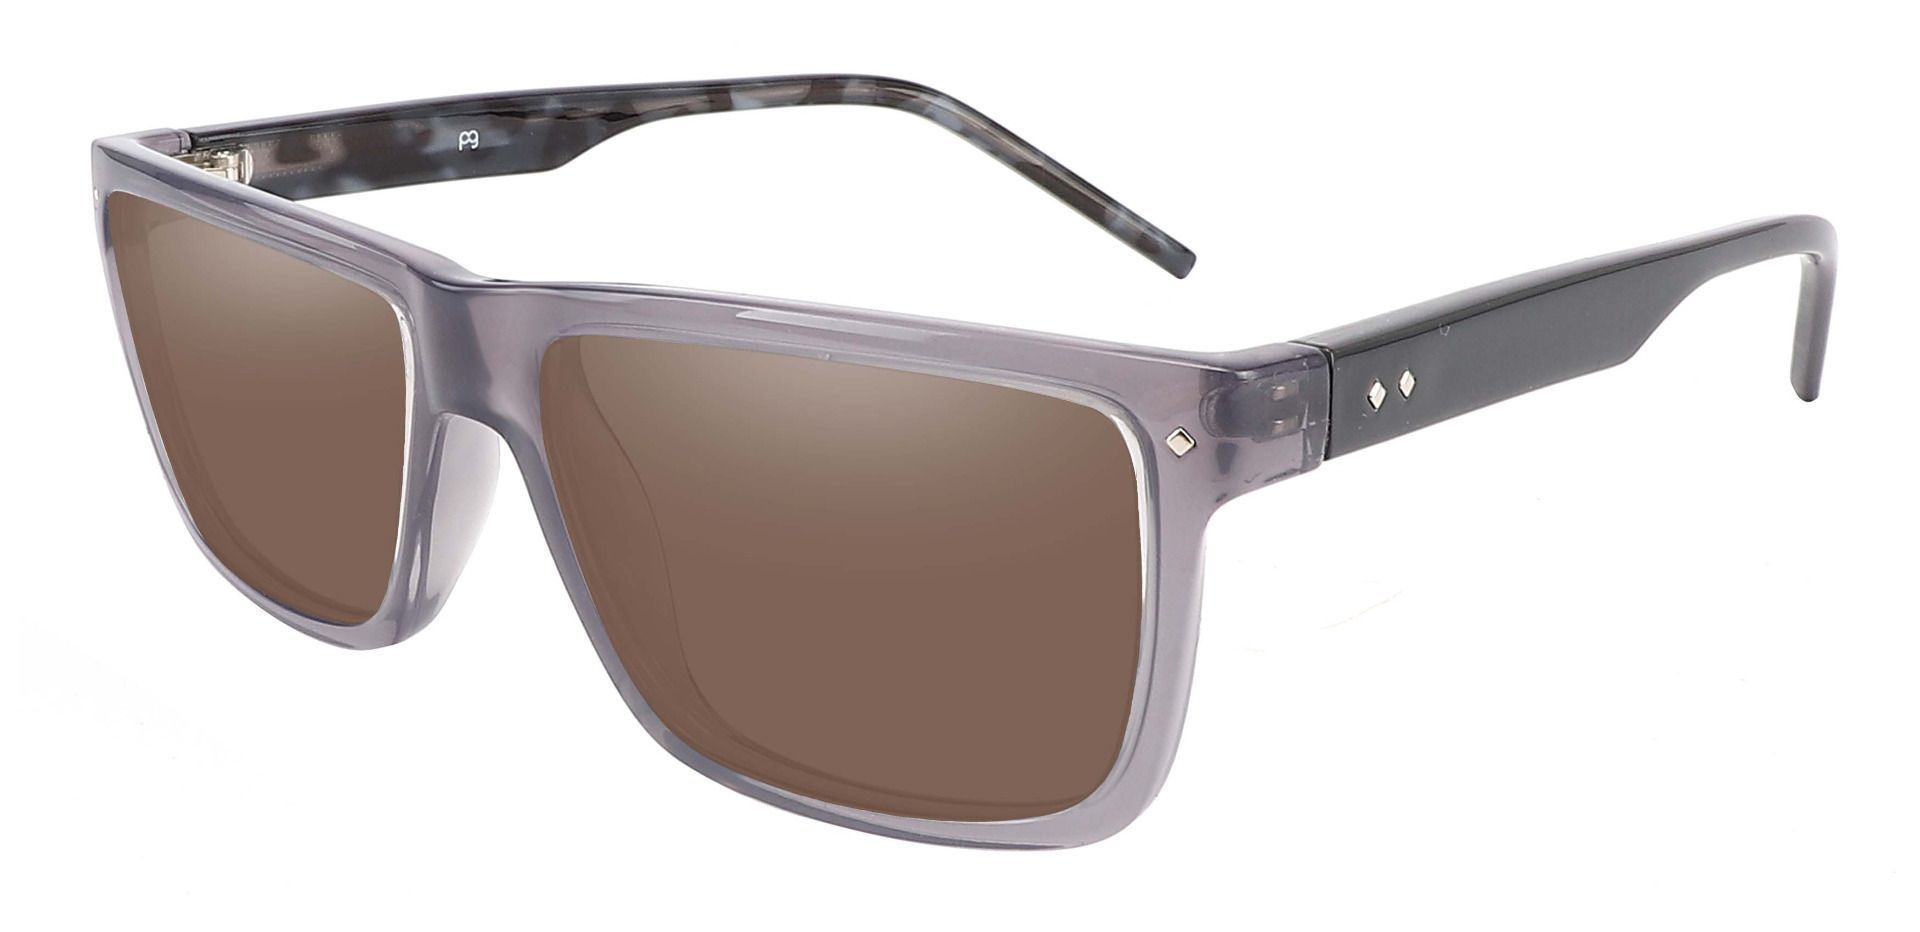 Marietta Rectangle Non-Rx Sunglasses - Gray Frame With Brown Lenses